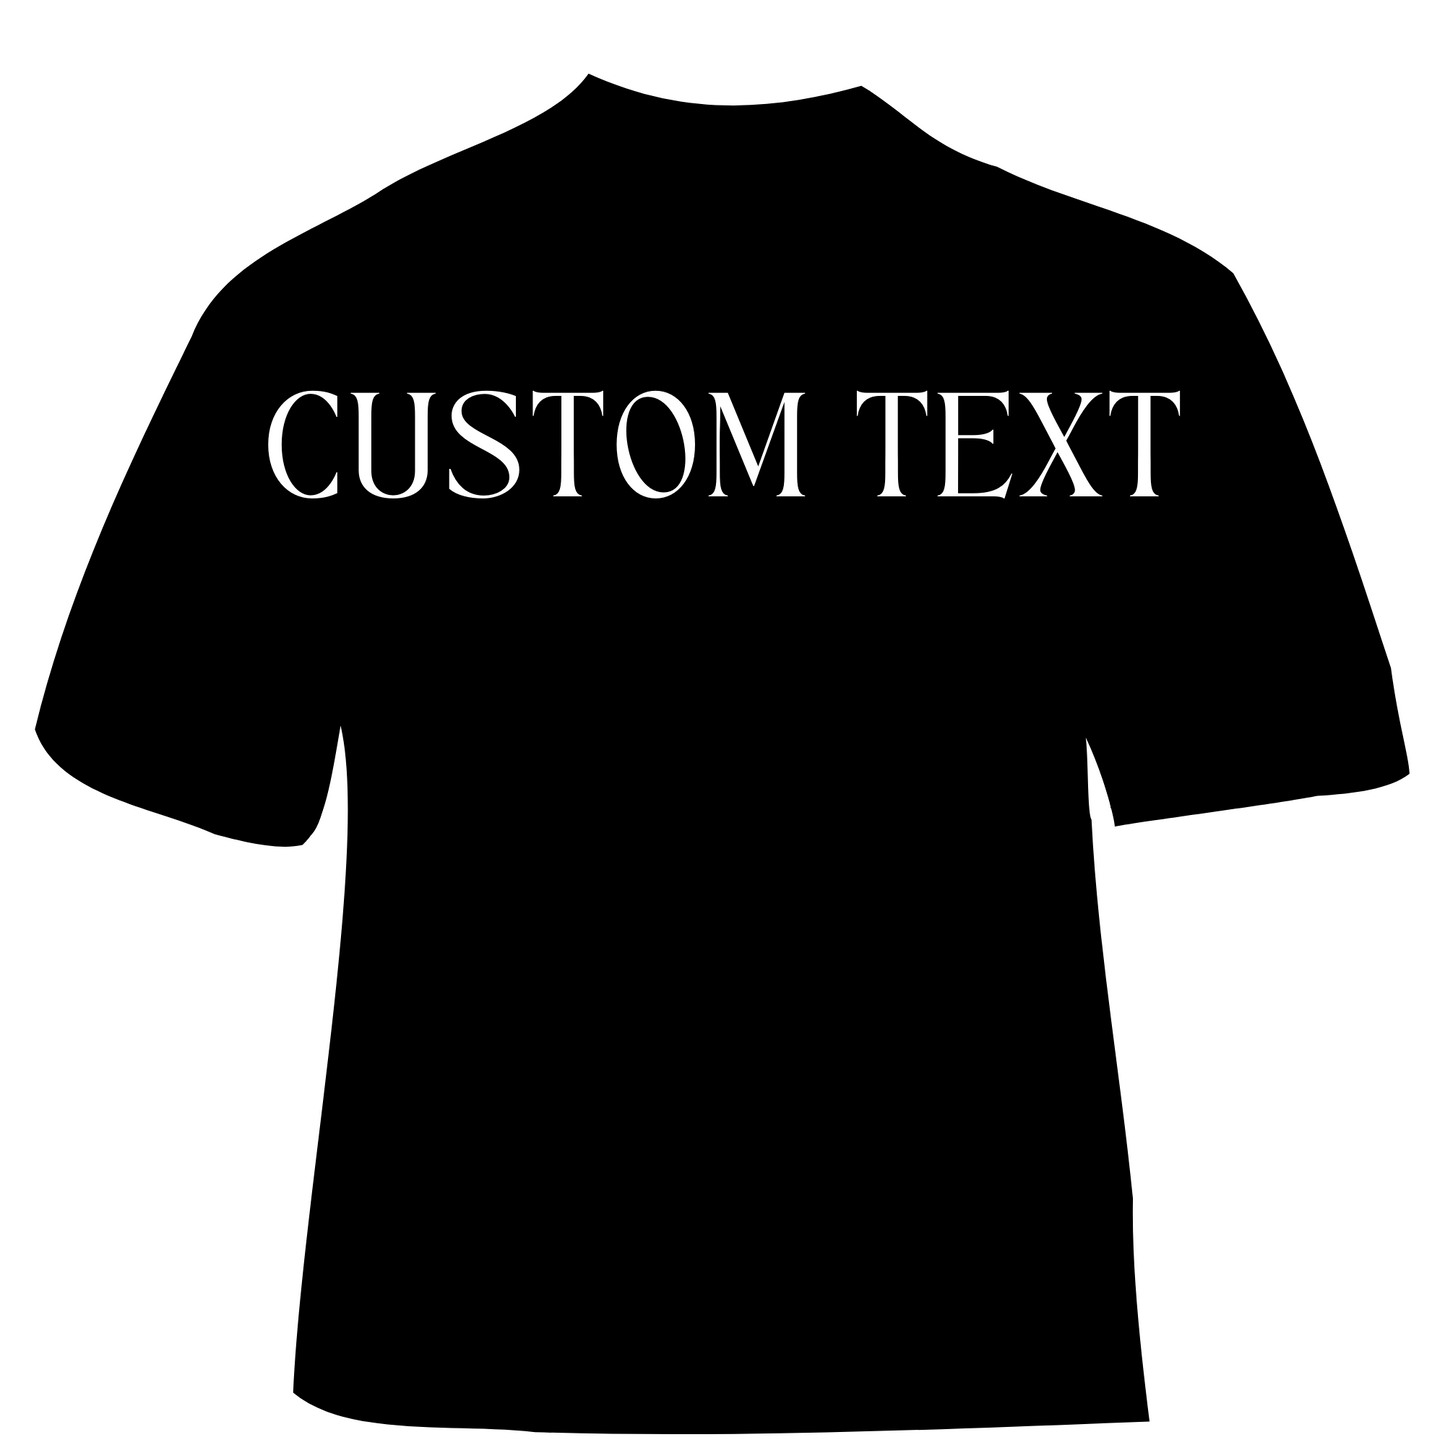 Shirt Customization - Name on Back of Shirt